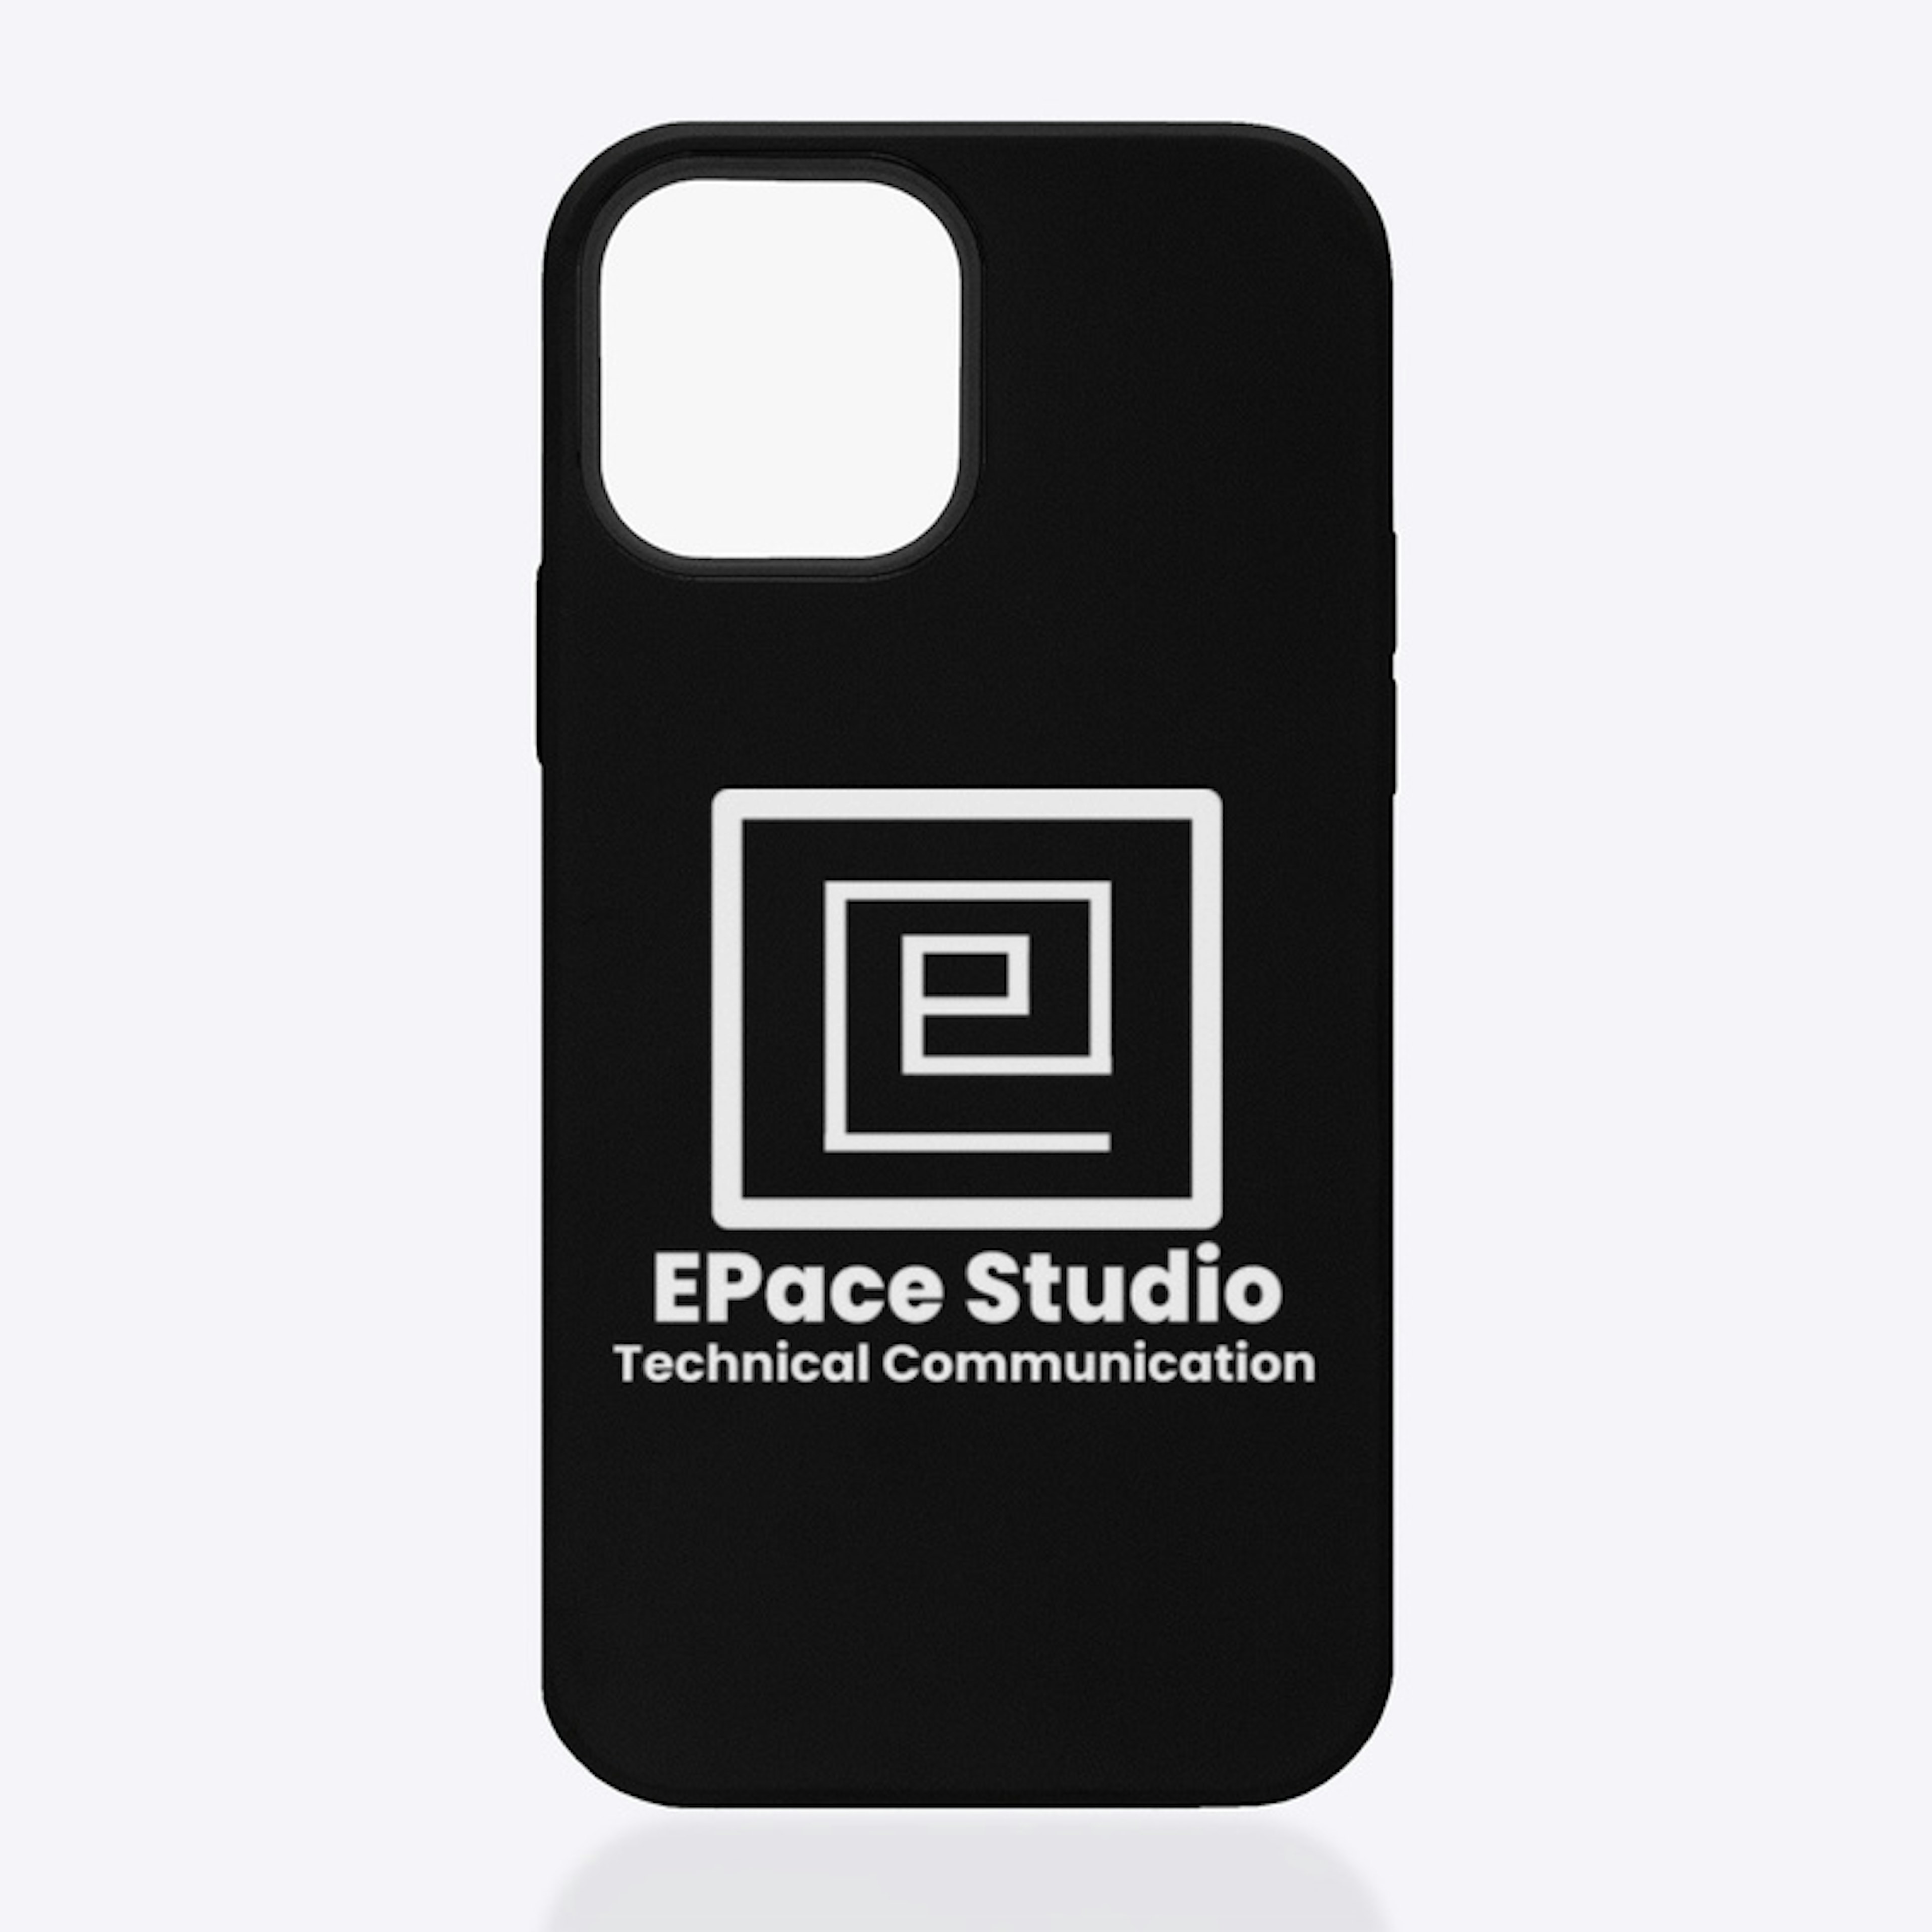 EPace Studio